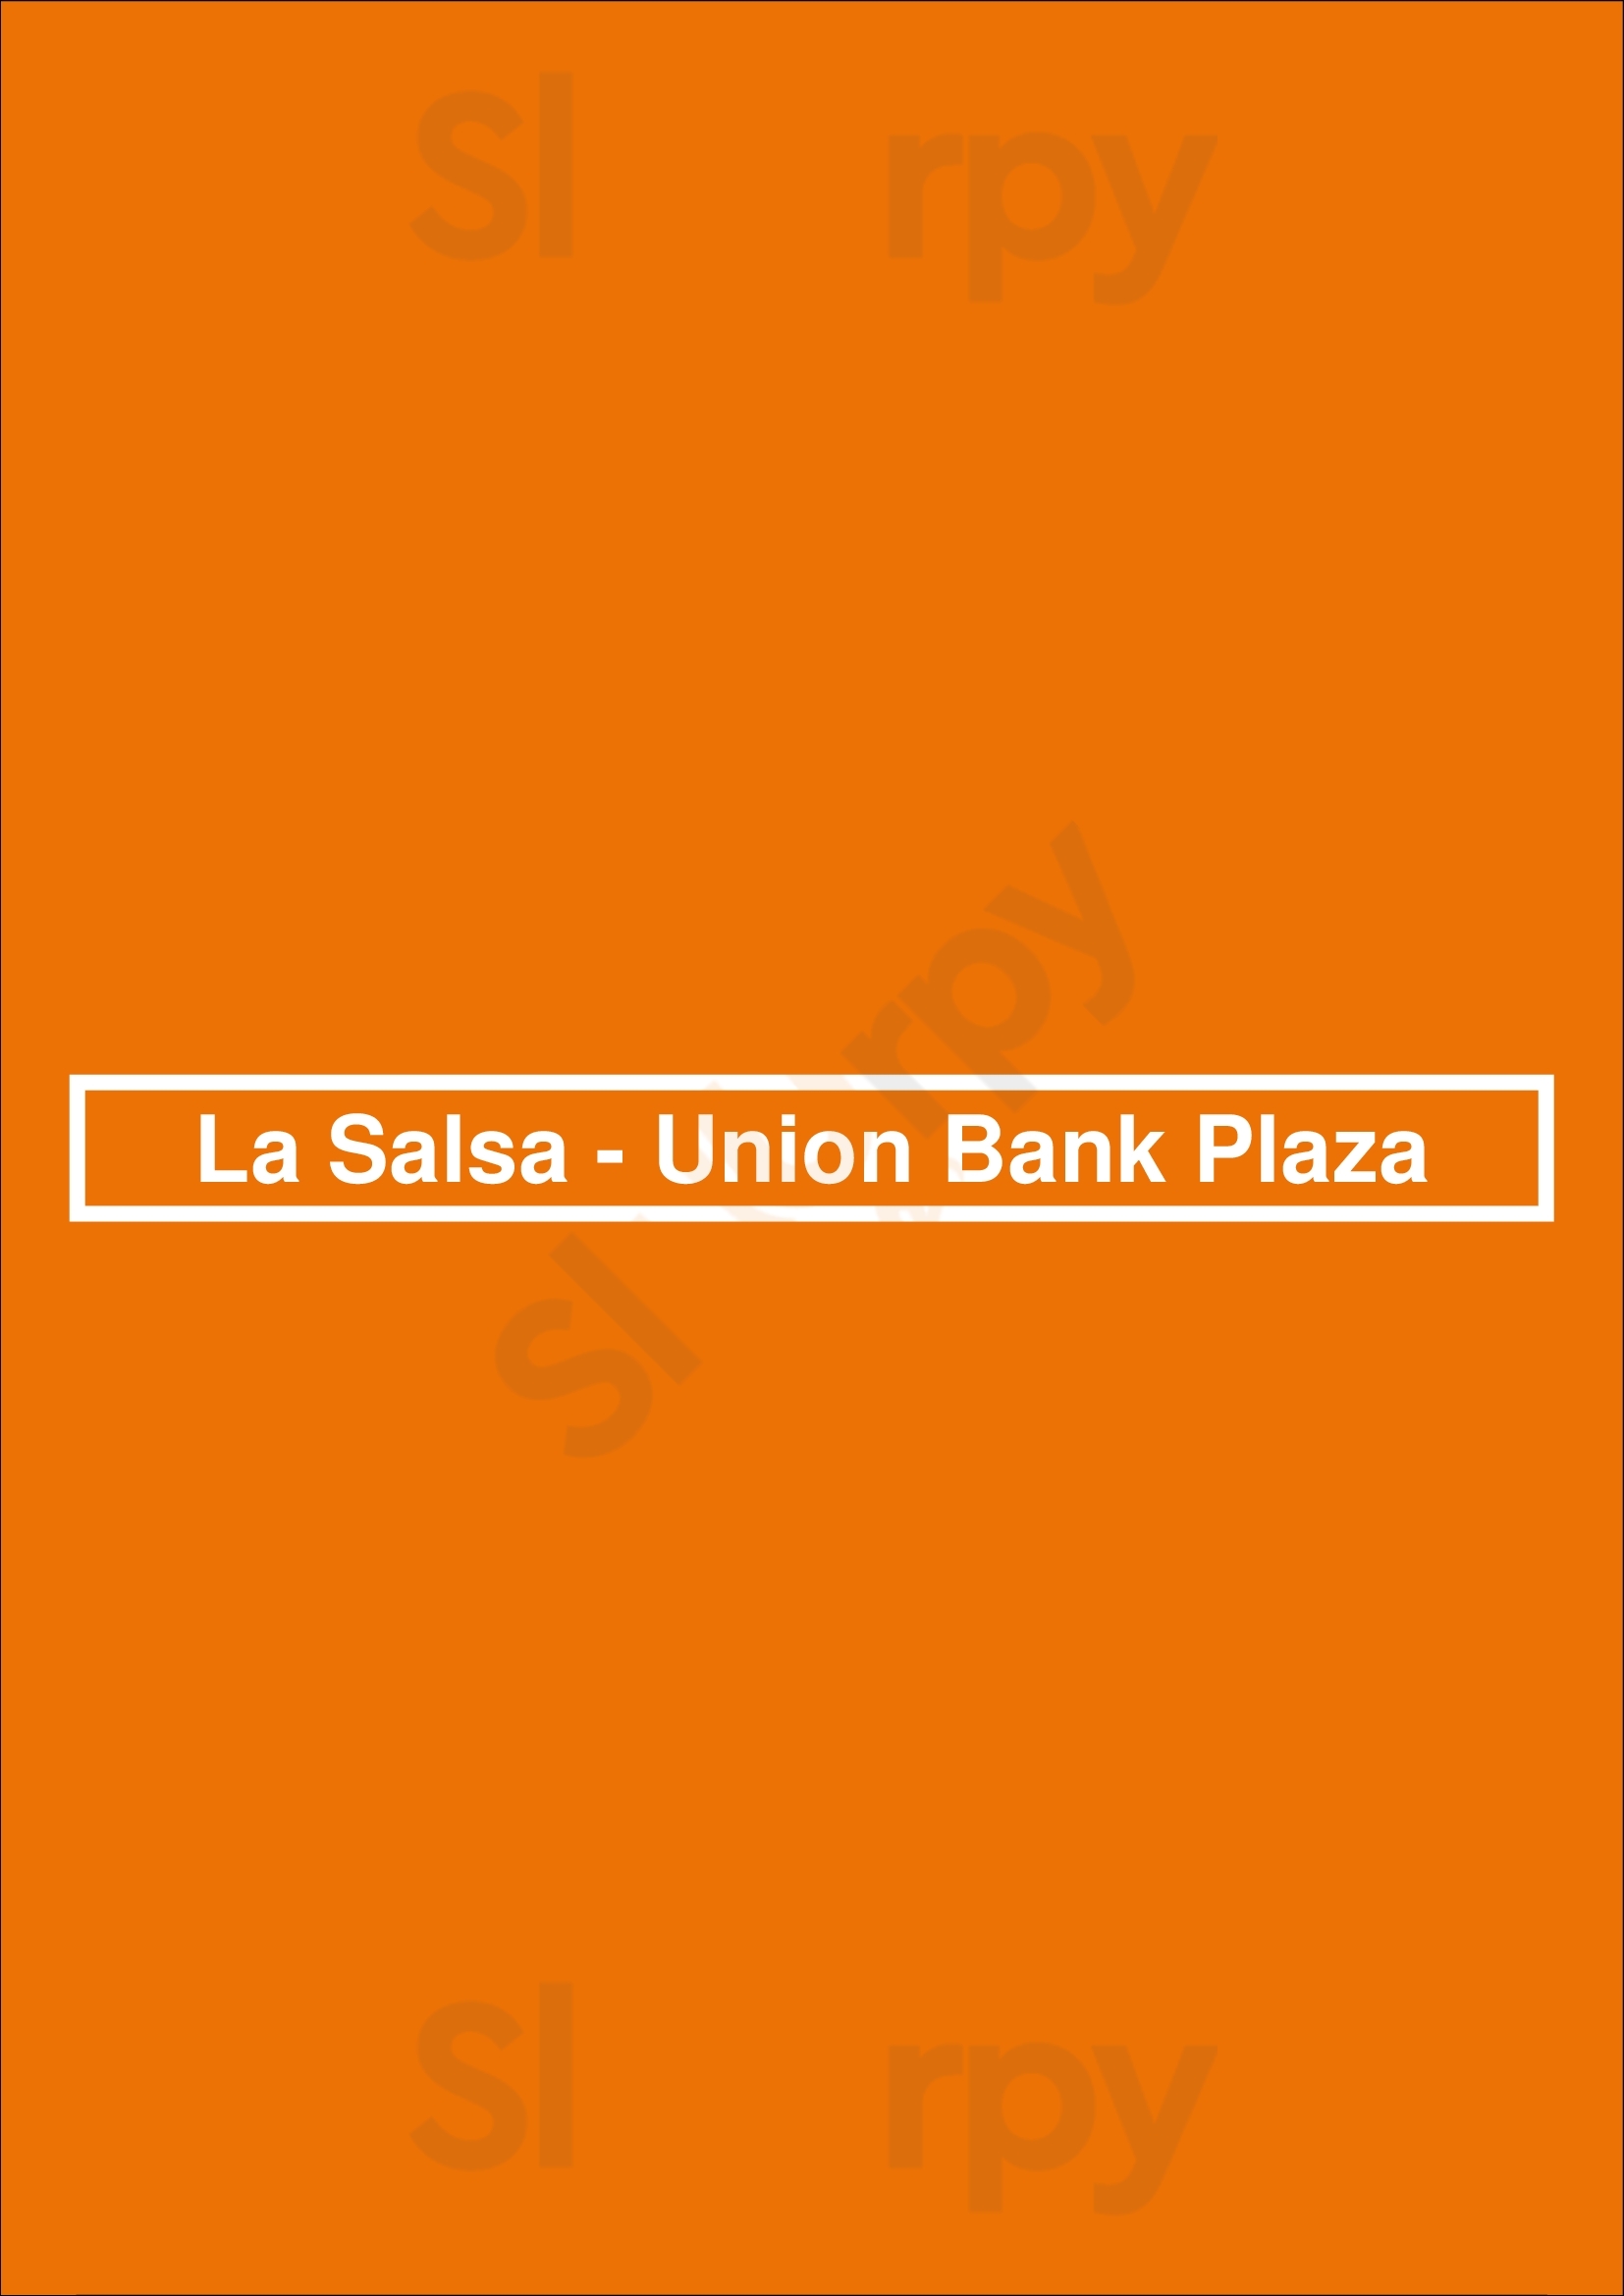 La Salsa - Union Bank Plaza Los Angeles Menu - 1